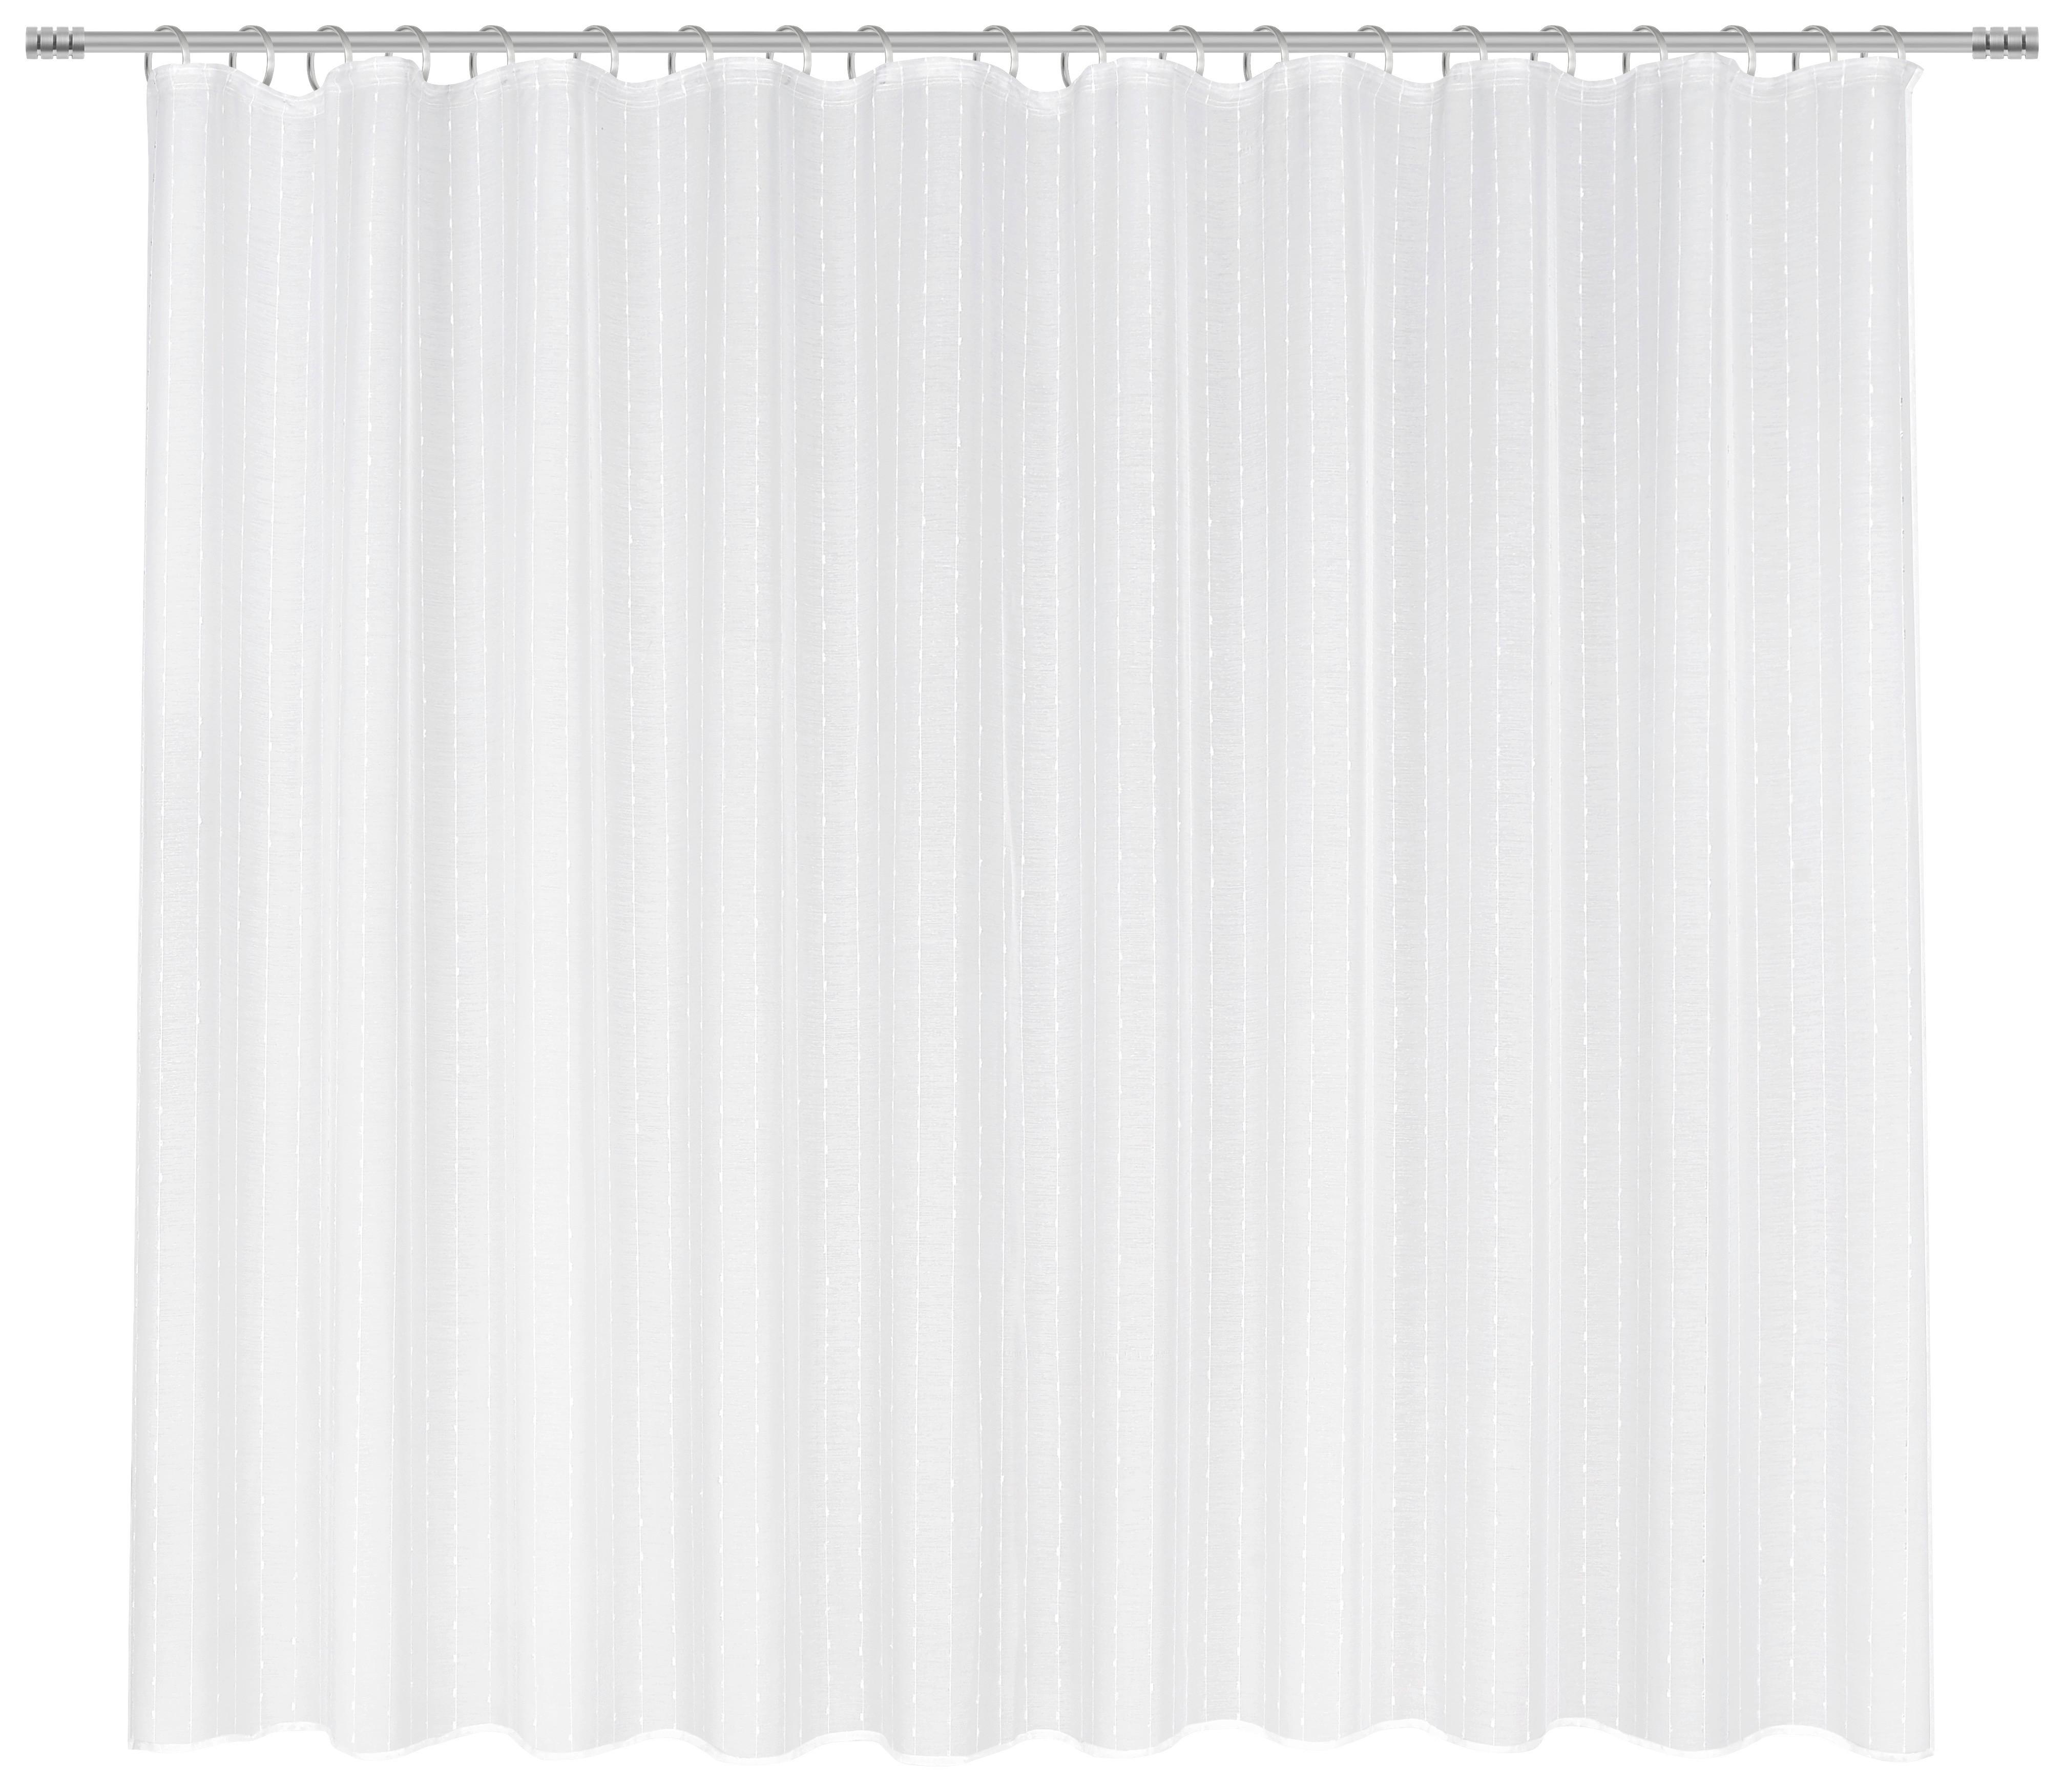 Készfüggöny Lisa 300/175 - Fehér, romantikus/Landhaus, Textil (300/175cm) - Modern Living